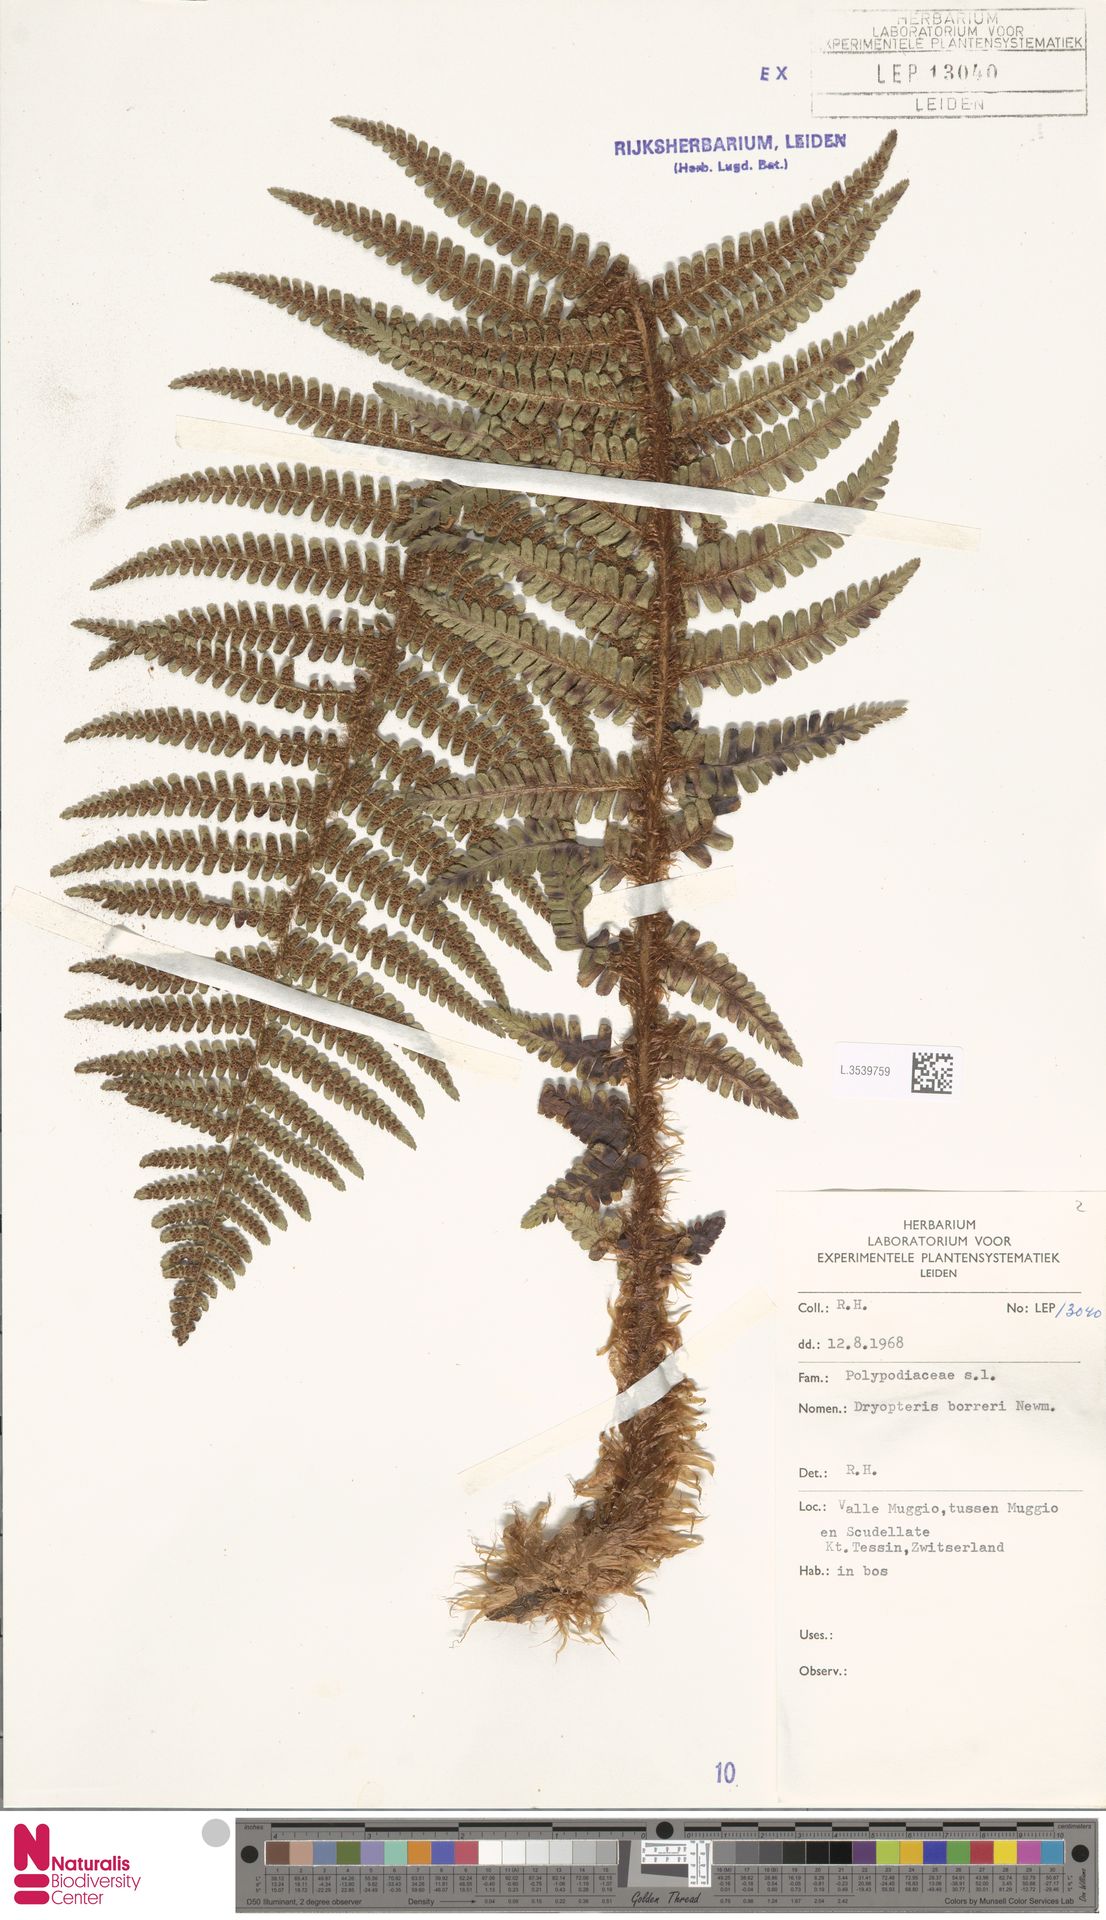 Dryopteris cambrensis subsp. insubrica image